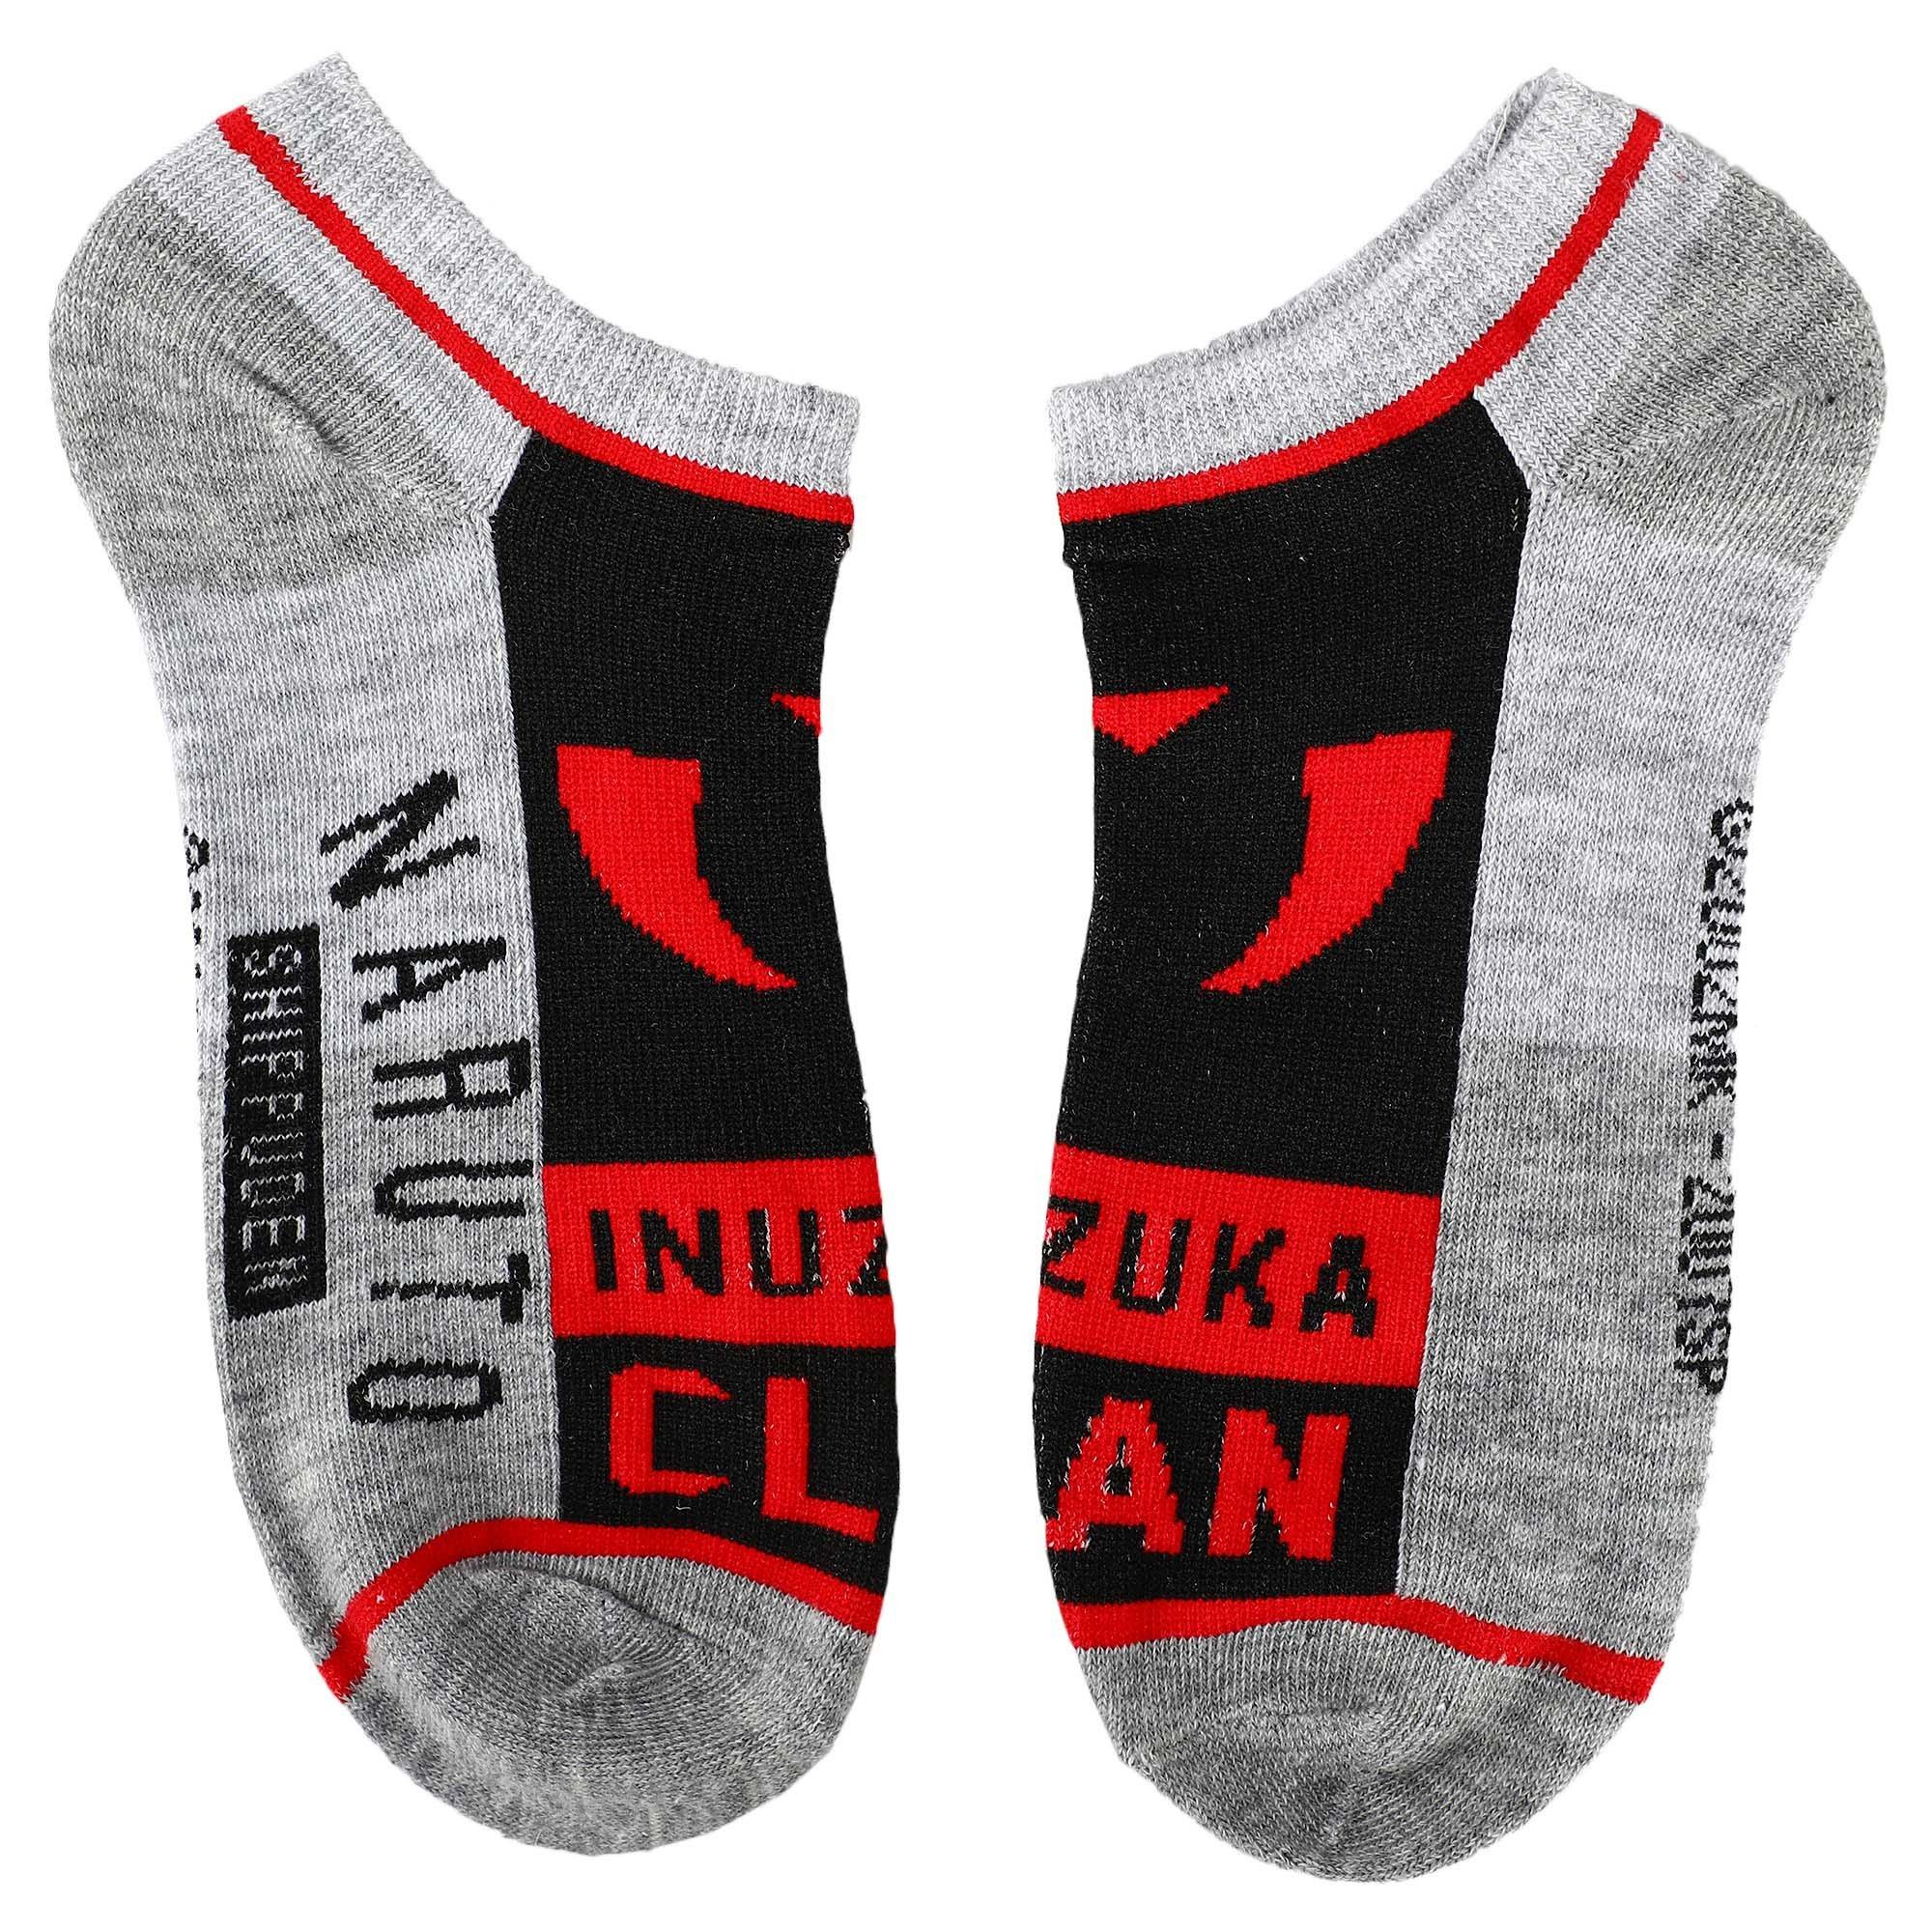 Naruto Clan Symbol Ankle Socks 5 Pack